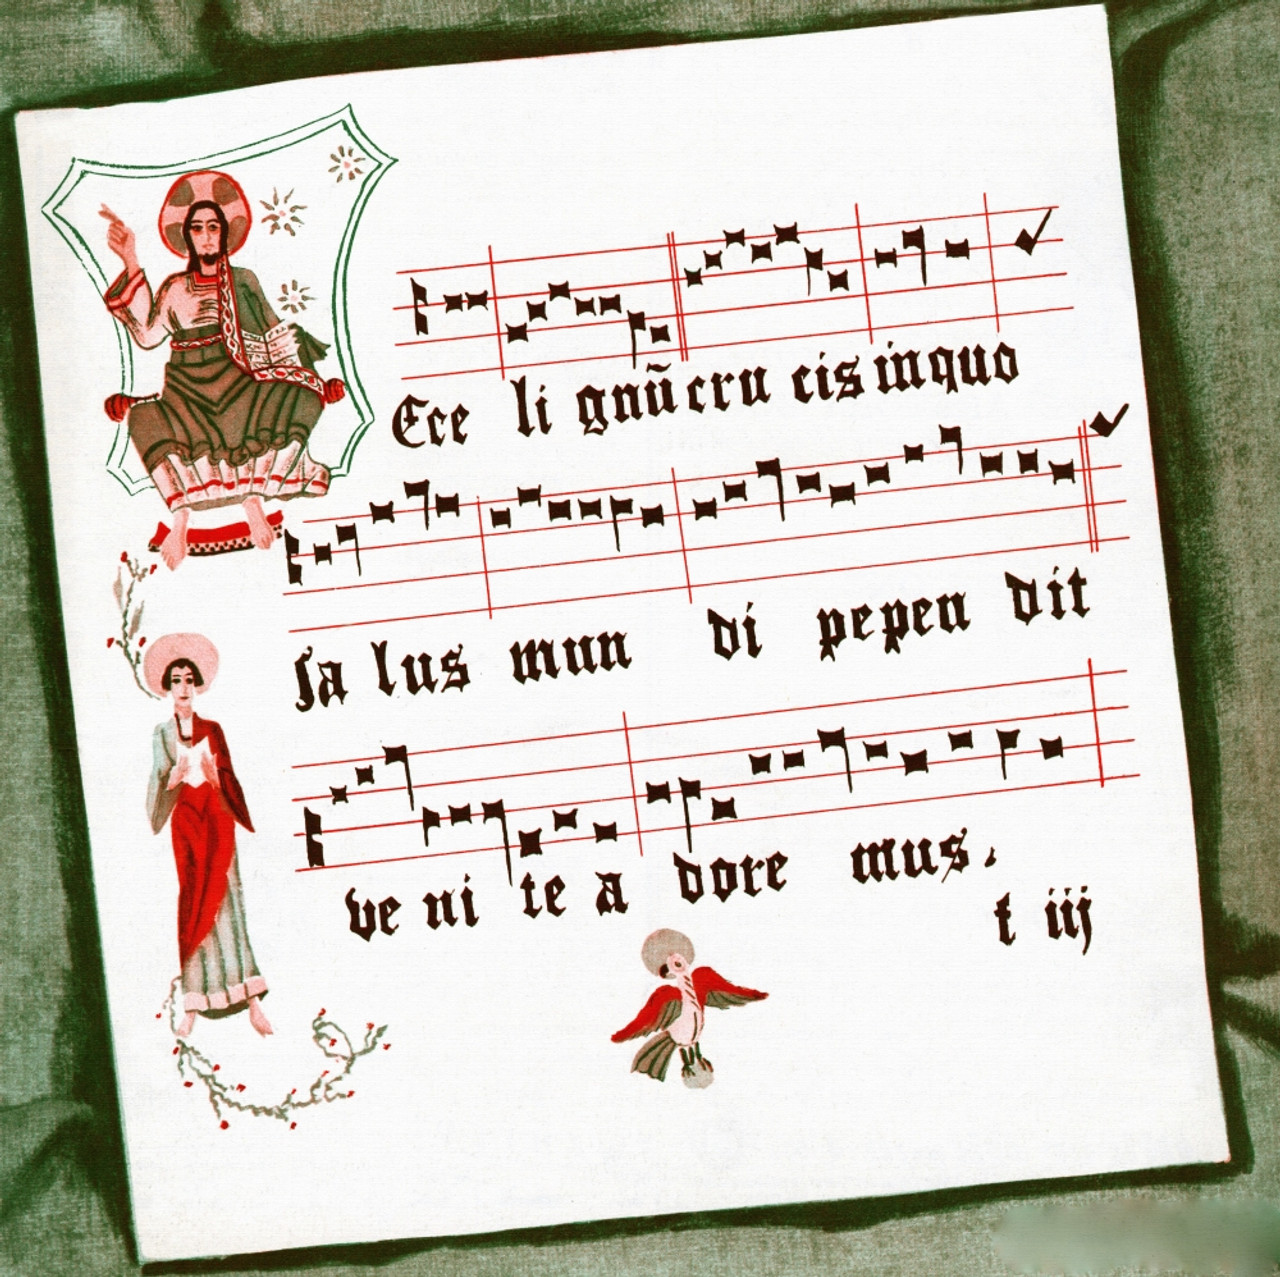 Latin Prayer Posters